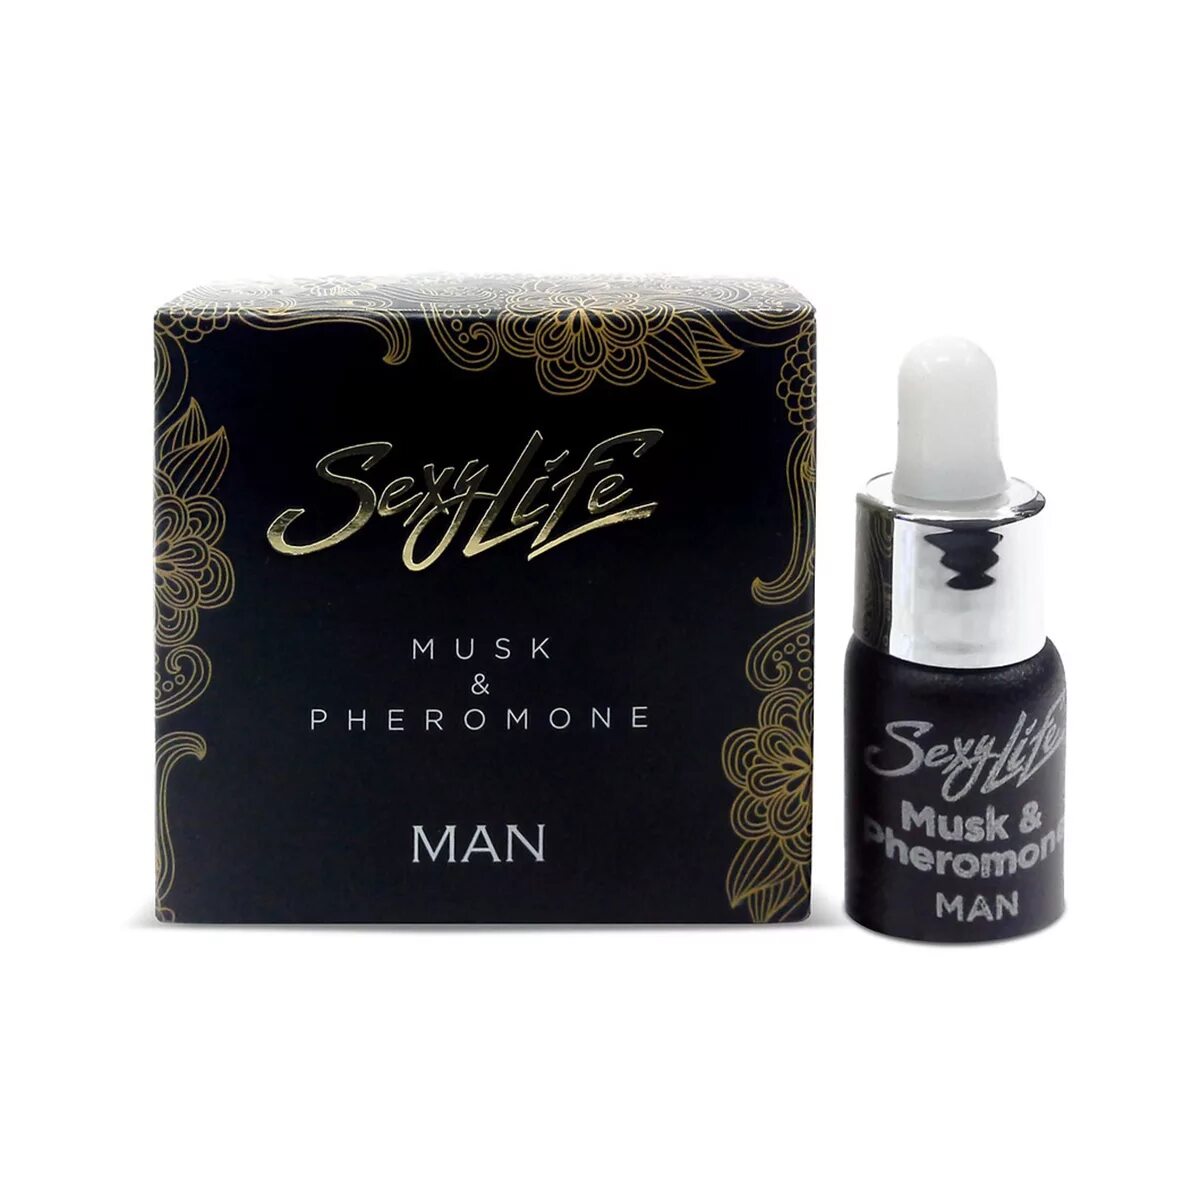 Parfume Prestige m мужские духи с феромонами sexy Life № 1, 10 мл. Концентрированные феромоны sexy Life мужские. Musk Pheromone man.